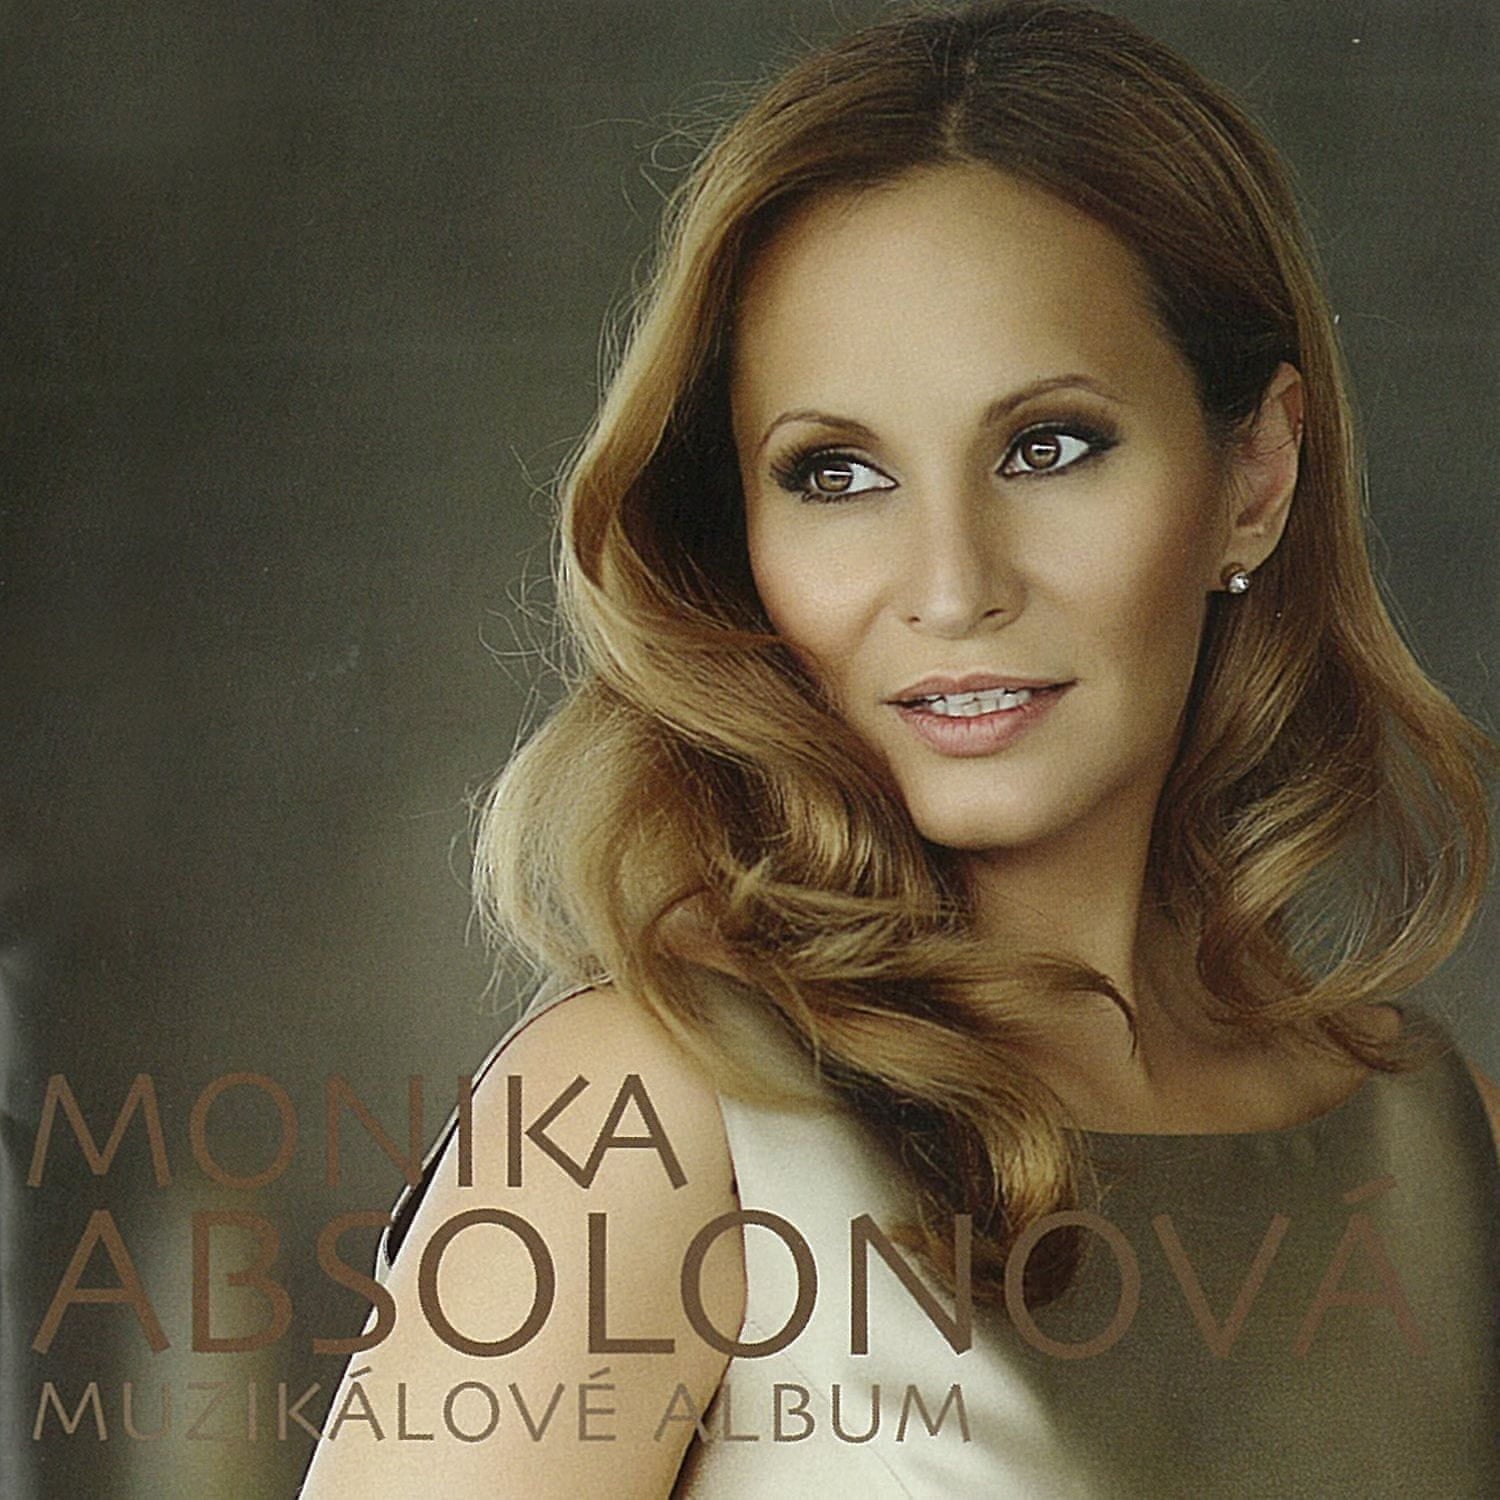 Monika Absolonova: Muzikalove-Album-CD